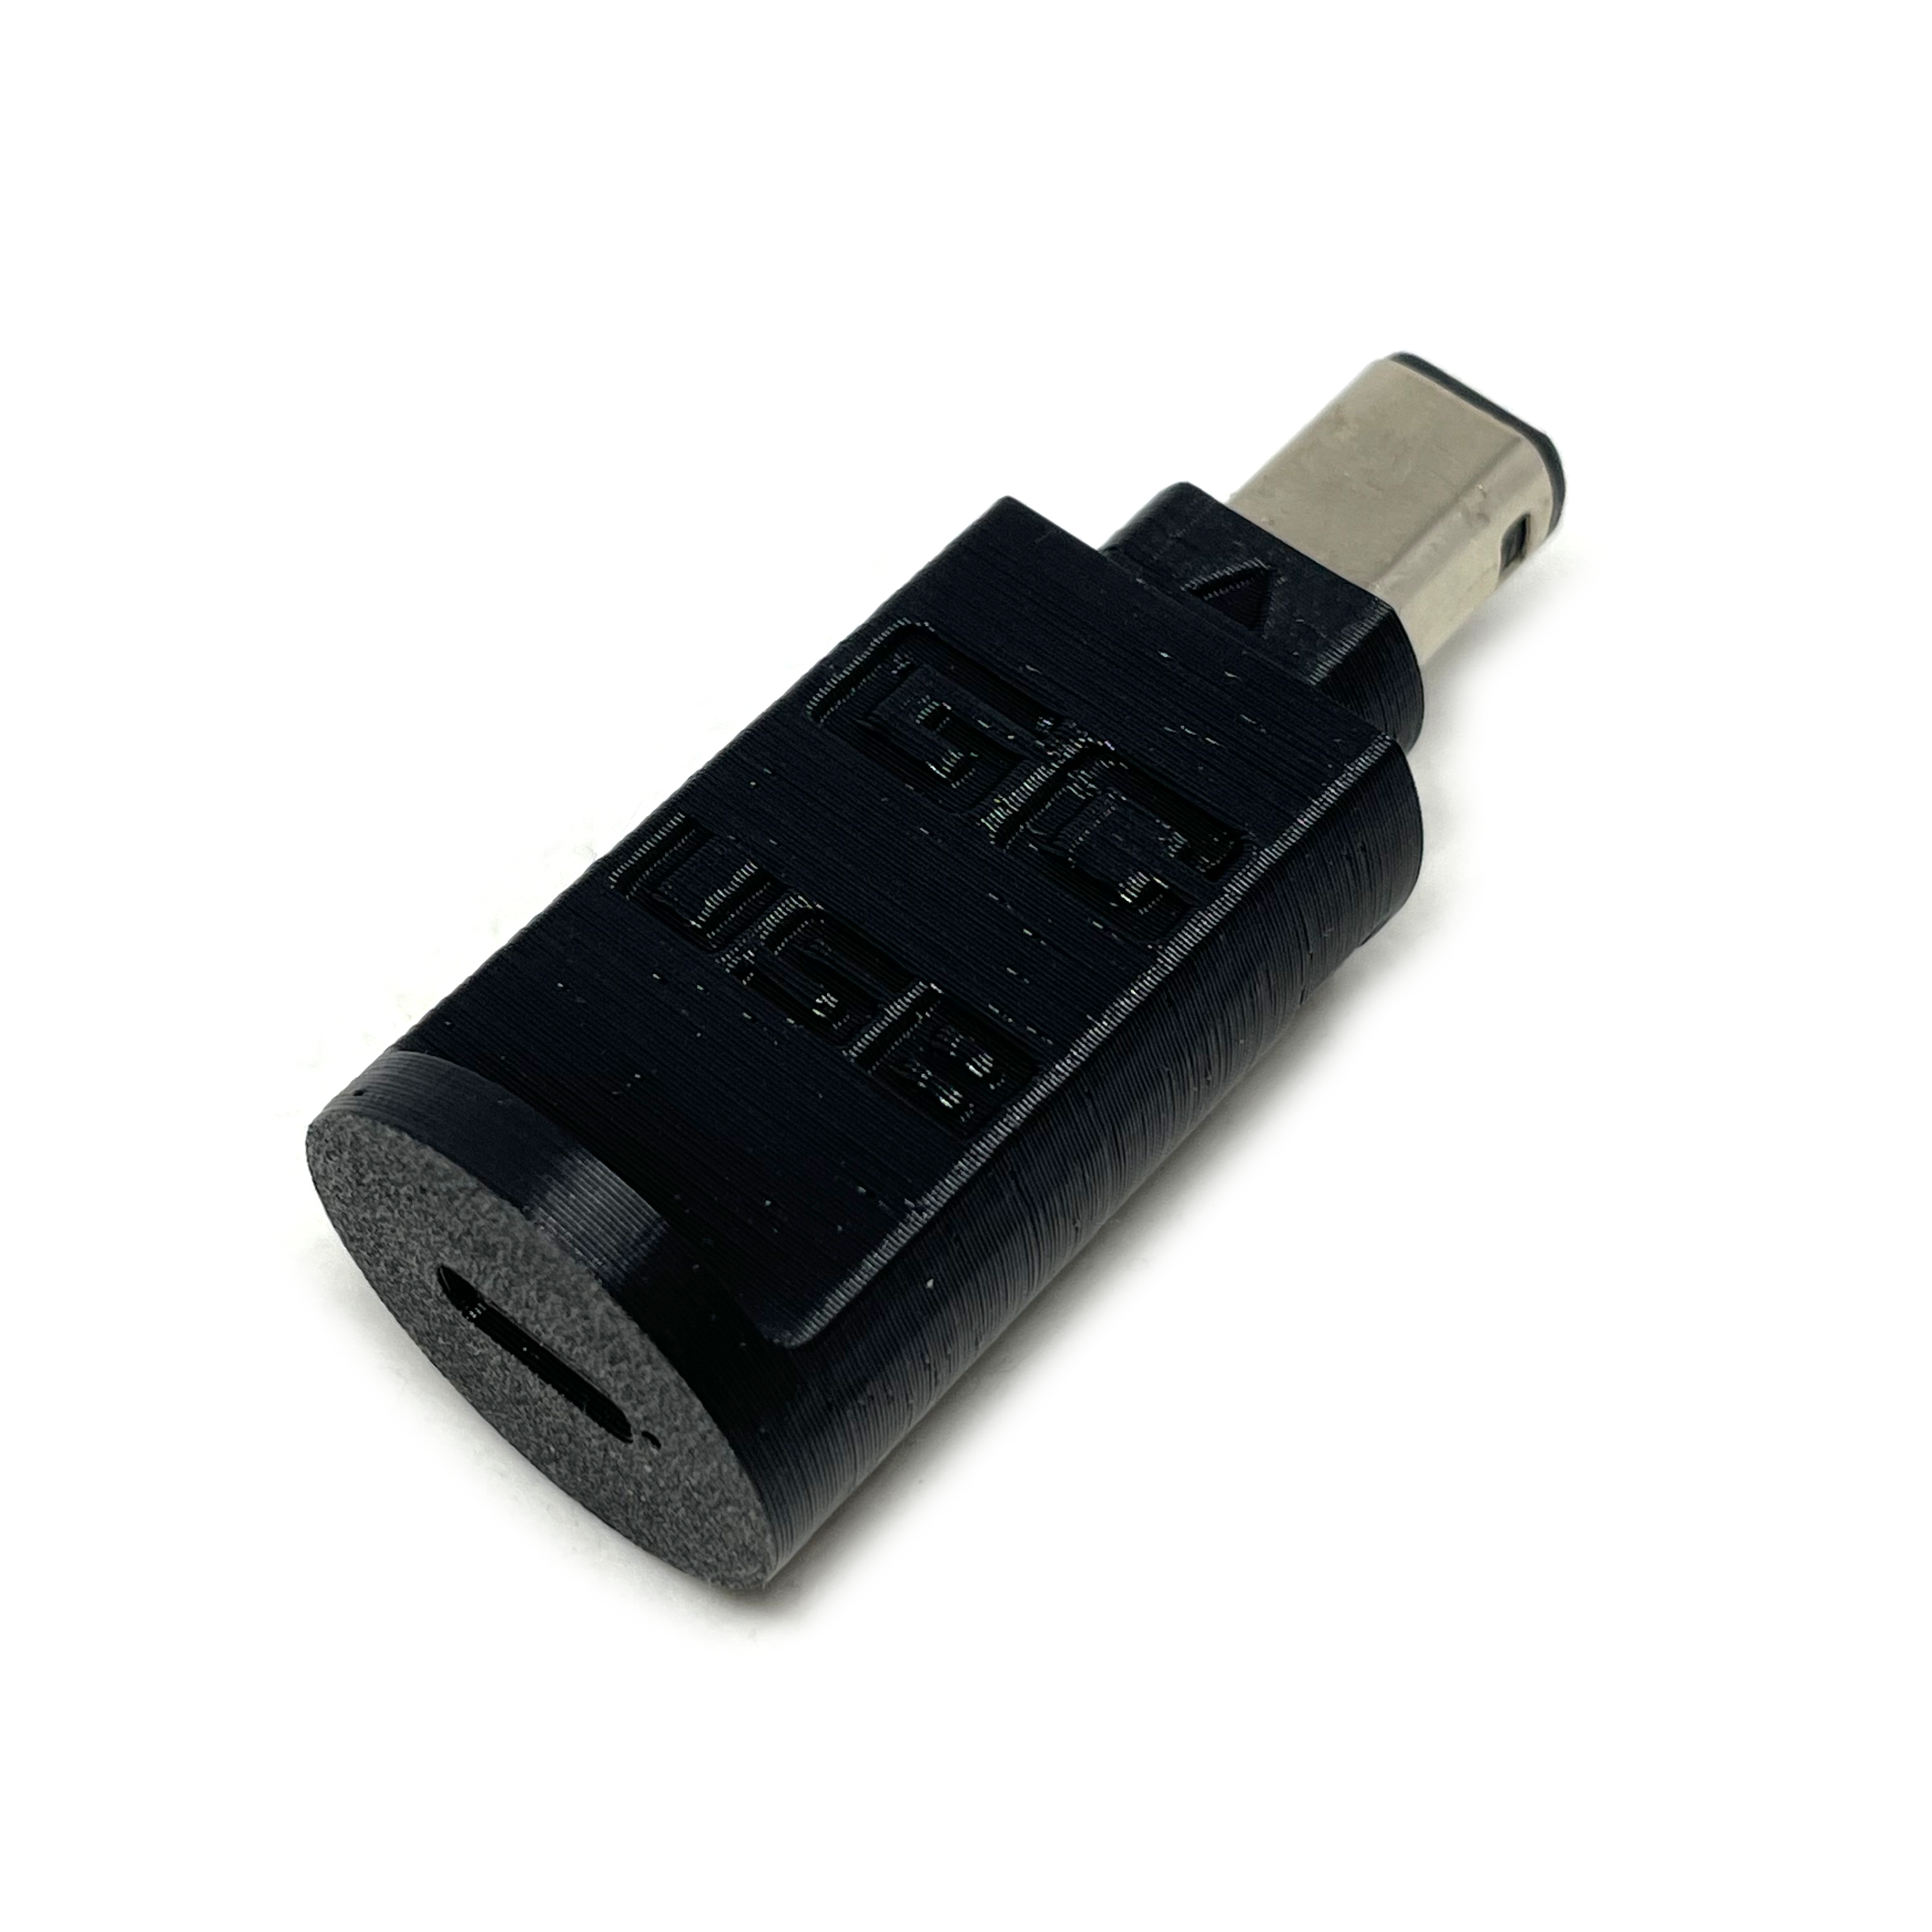 USB to GameCube Controller Adapter (GCUSB)